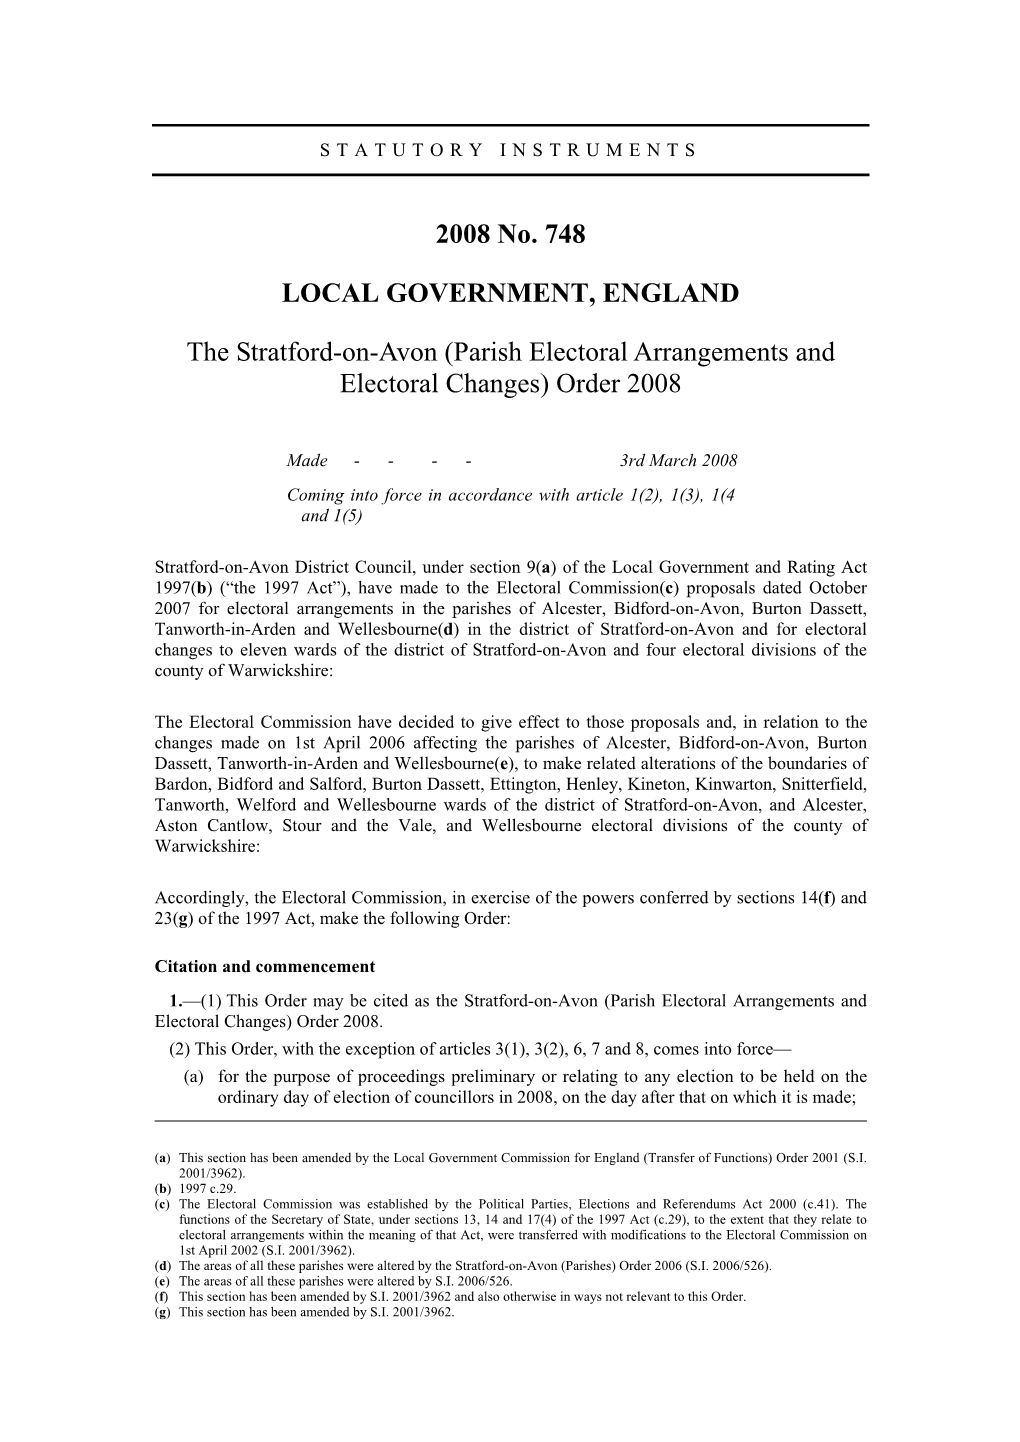 The Stratford-On-Avon (Parish Electoral Arrangements and Electoral Changes) Order 2008